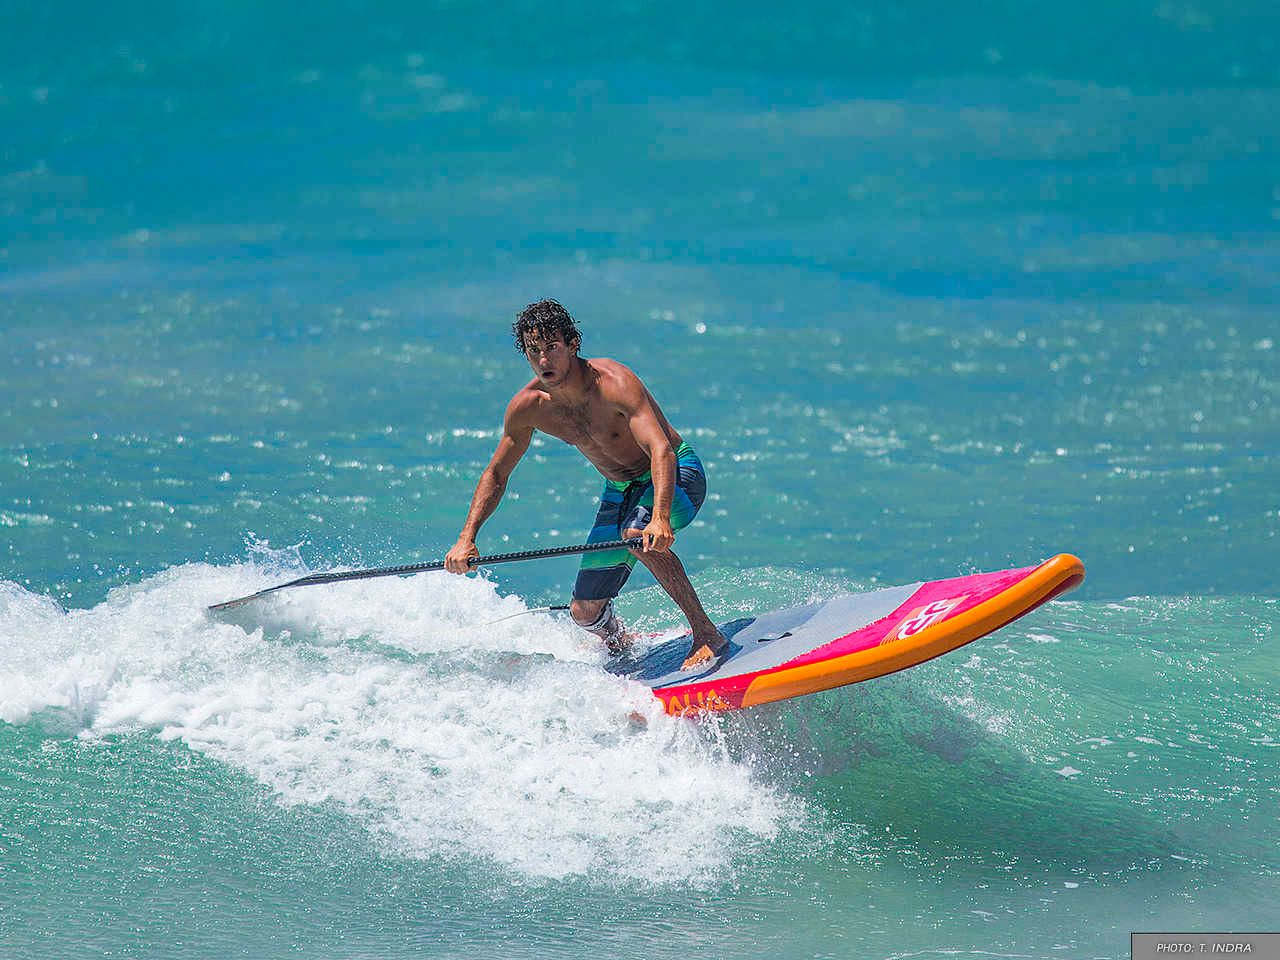 SUP 9'7 SurfAIR JP AUSTRALIA